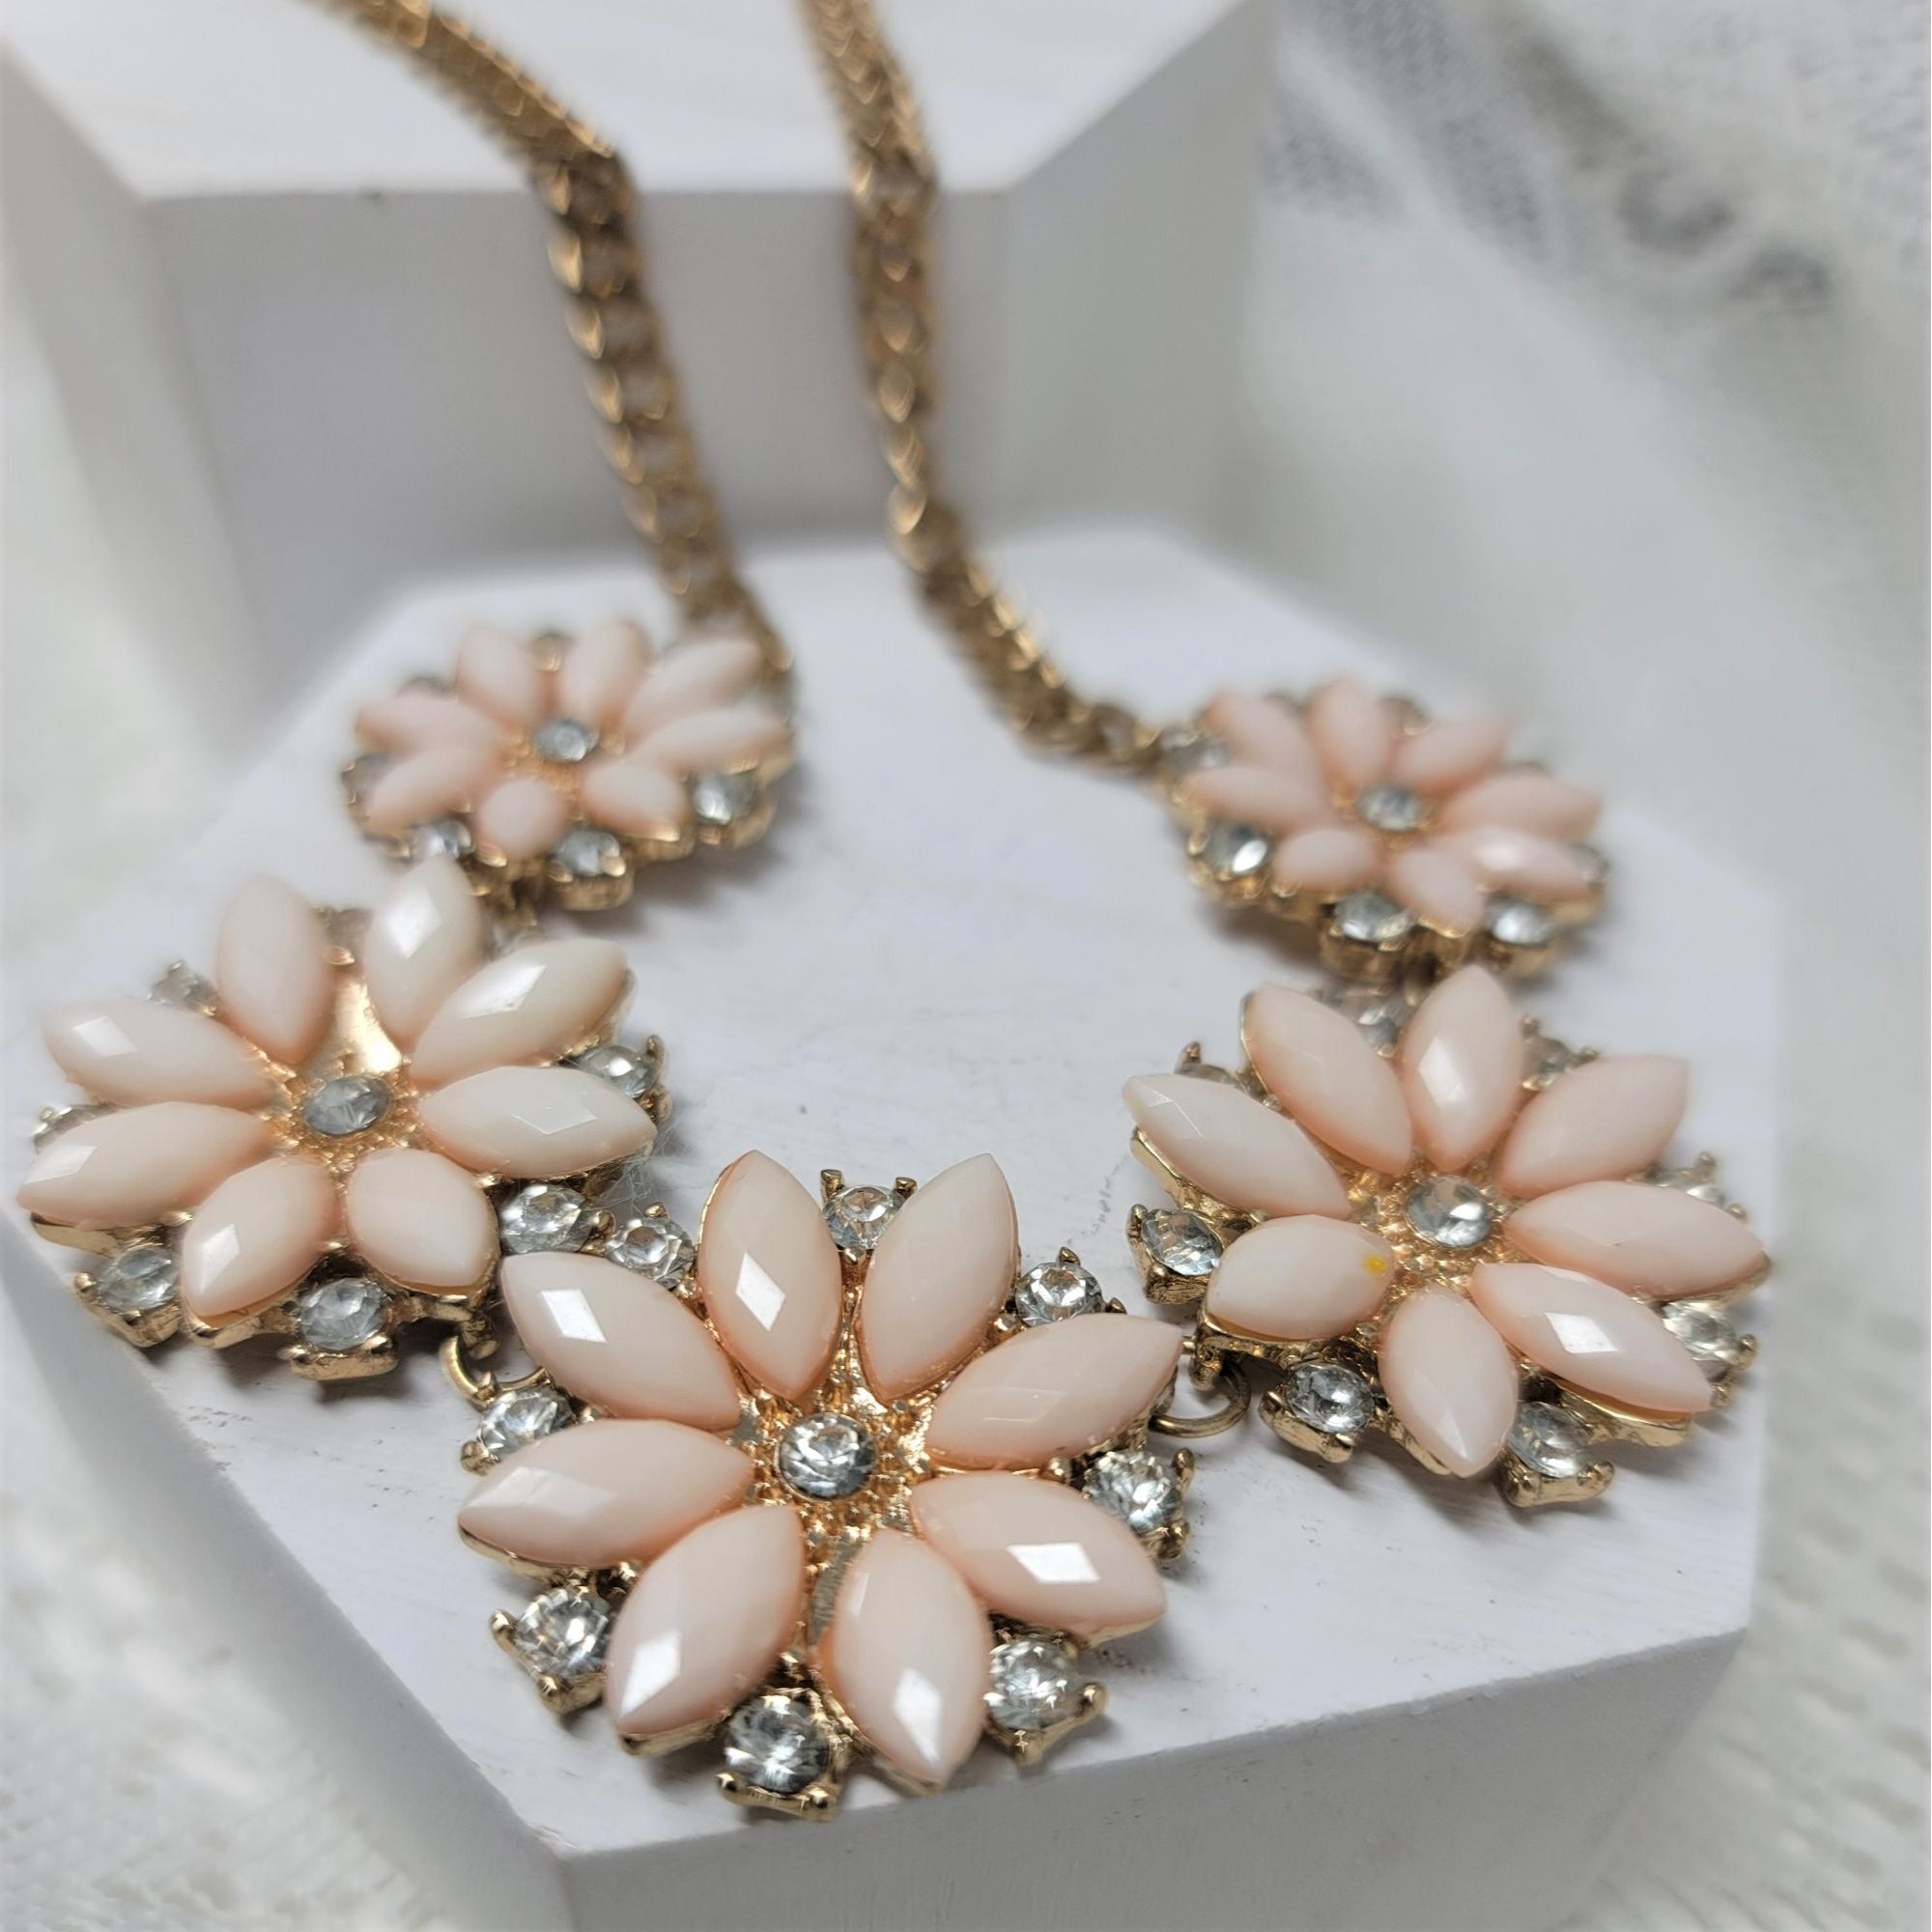 Pink Flower & Rhinestone Necklace Goldtone